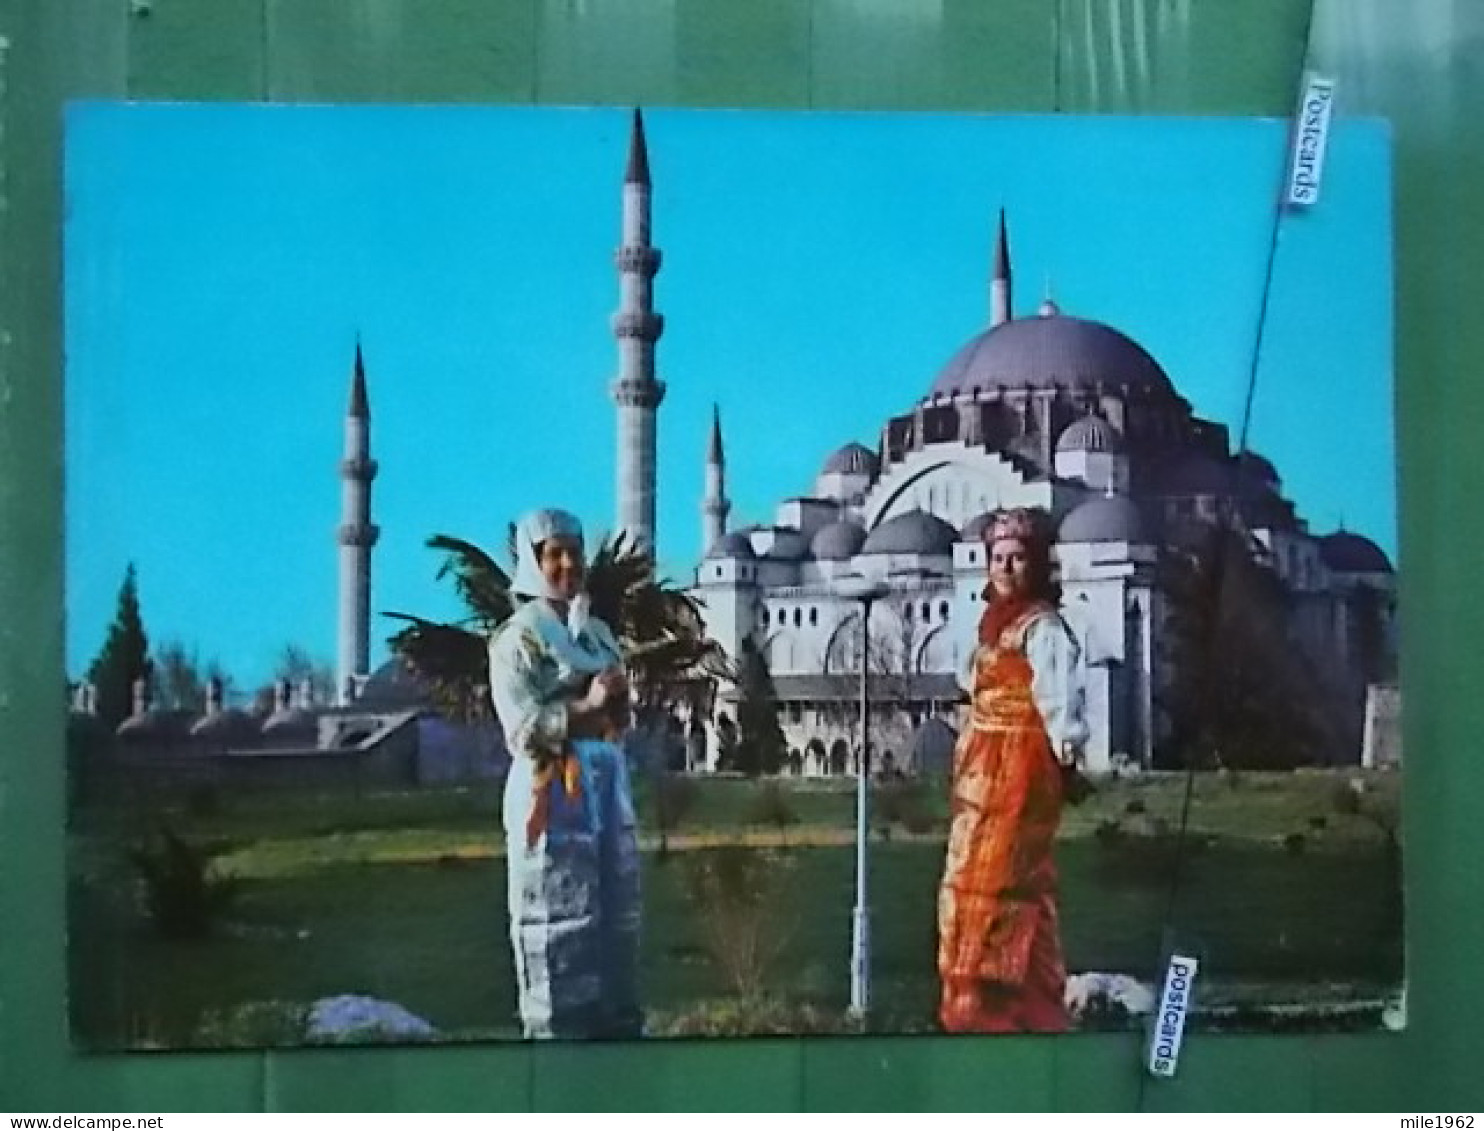 Kov 563-15 - ISTANBUL, TURKEY, MOSQUE, - Turchia